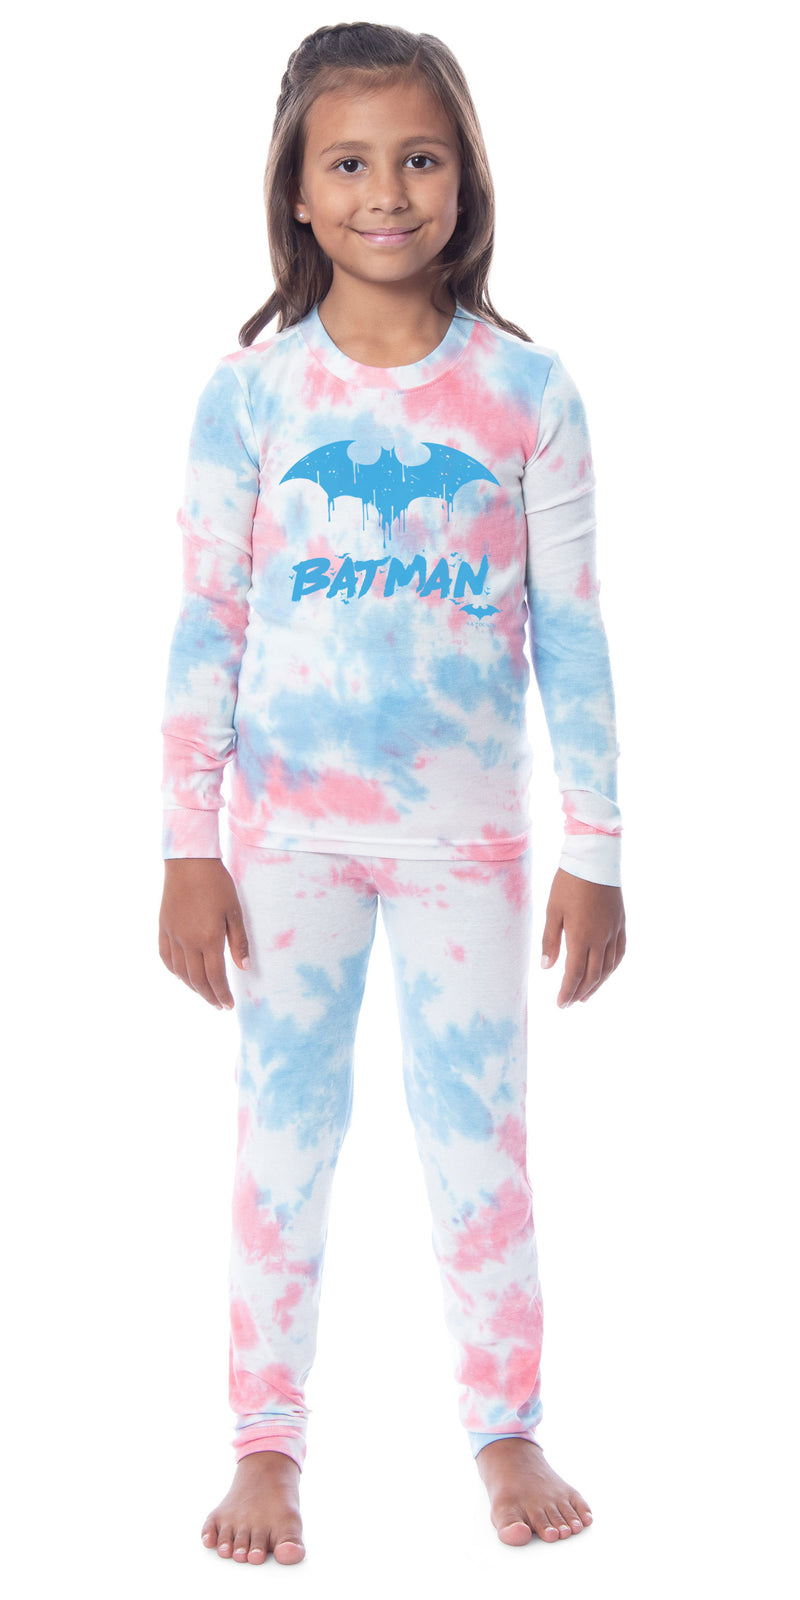 DC Comics Batman Unisex Youth Child Girls' Boys' Sleep Tight Fit Pajama Set